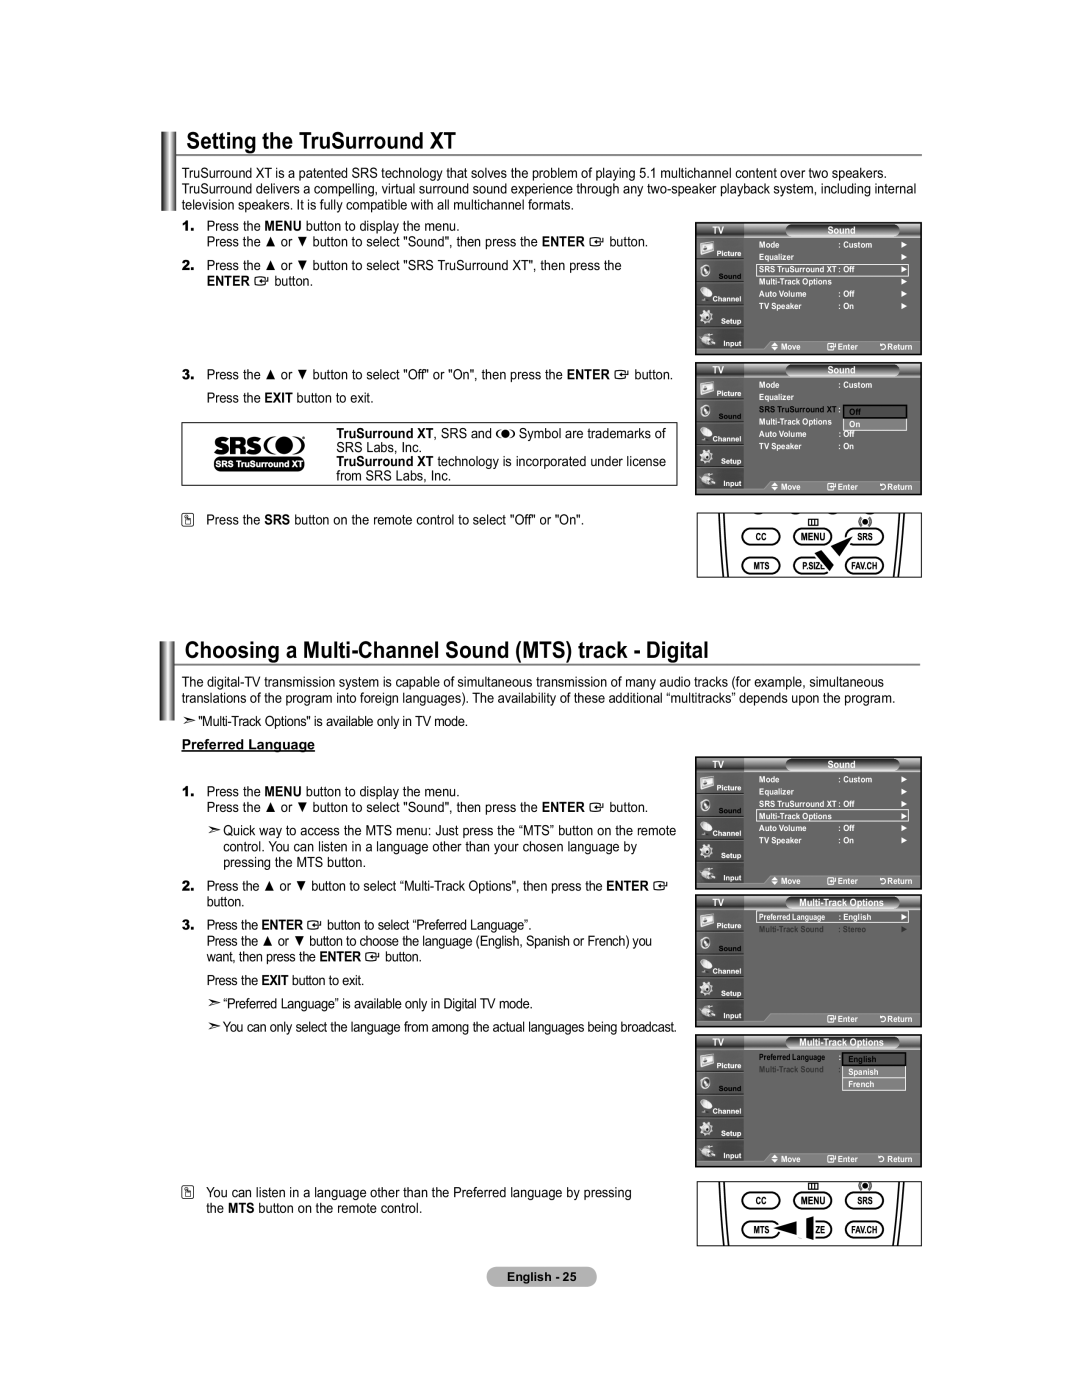 Samsung 451 Setting the TruSurround XT, Choosing a Multi-Channel Sound MTS track - Digital, Enter, Preferred Language 